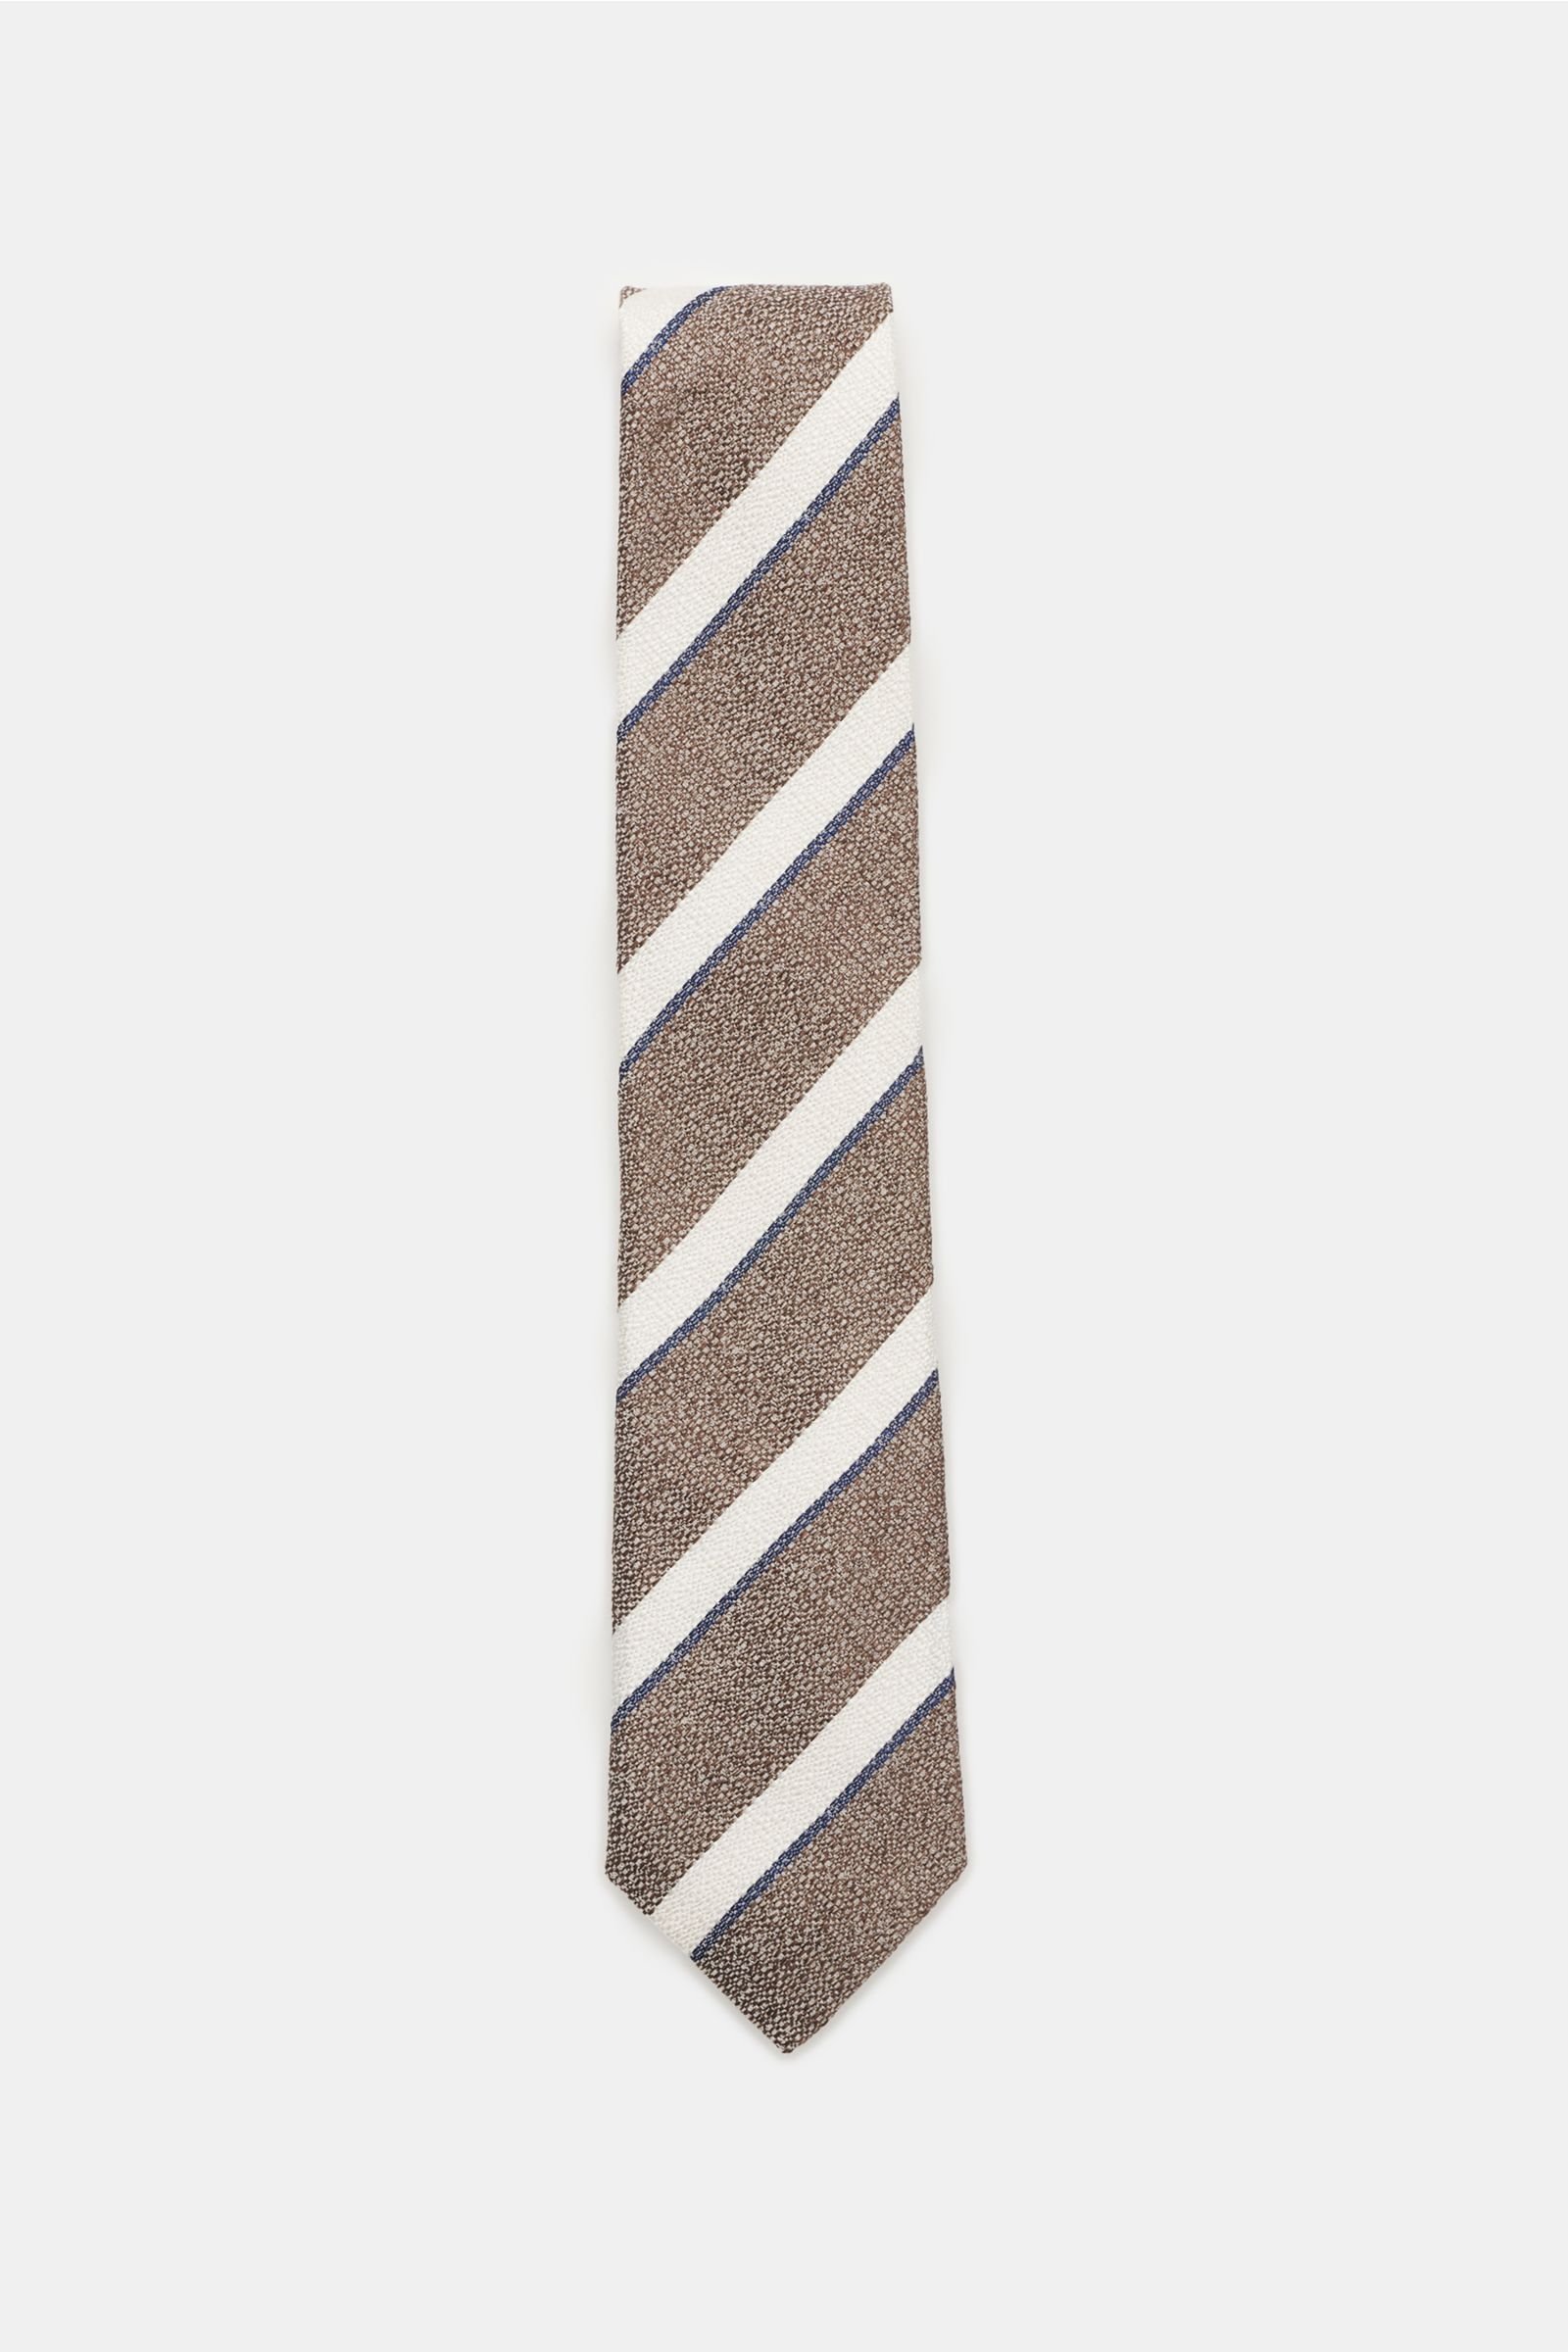 Krawatte graubraun/weiß gestreift